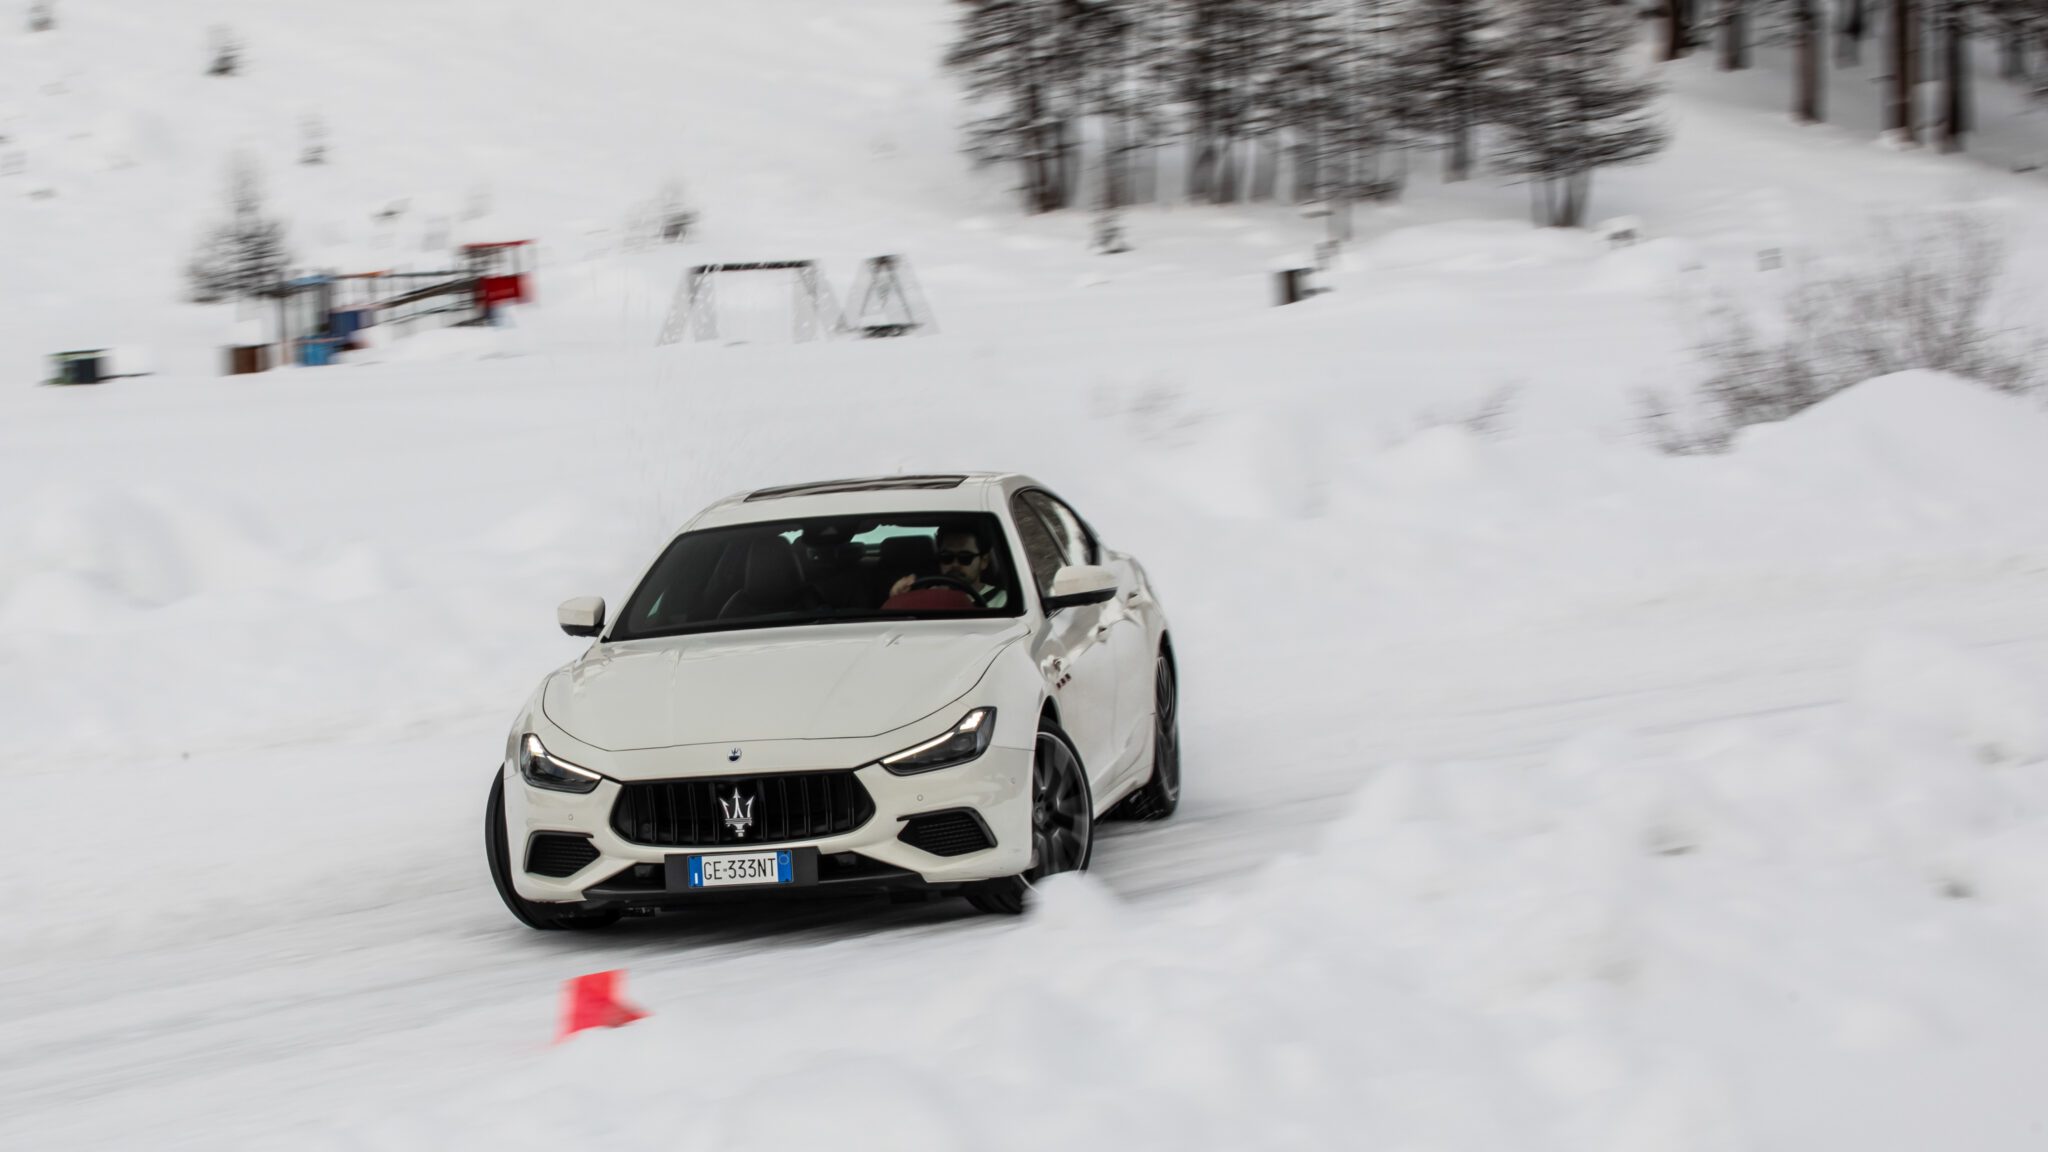 A white Maserati sedan drifting in the snow.